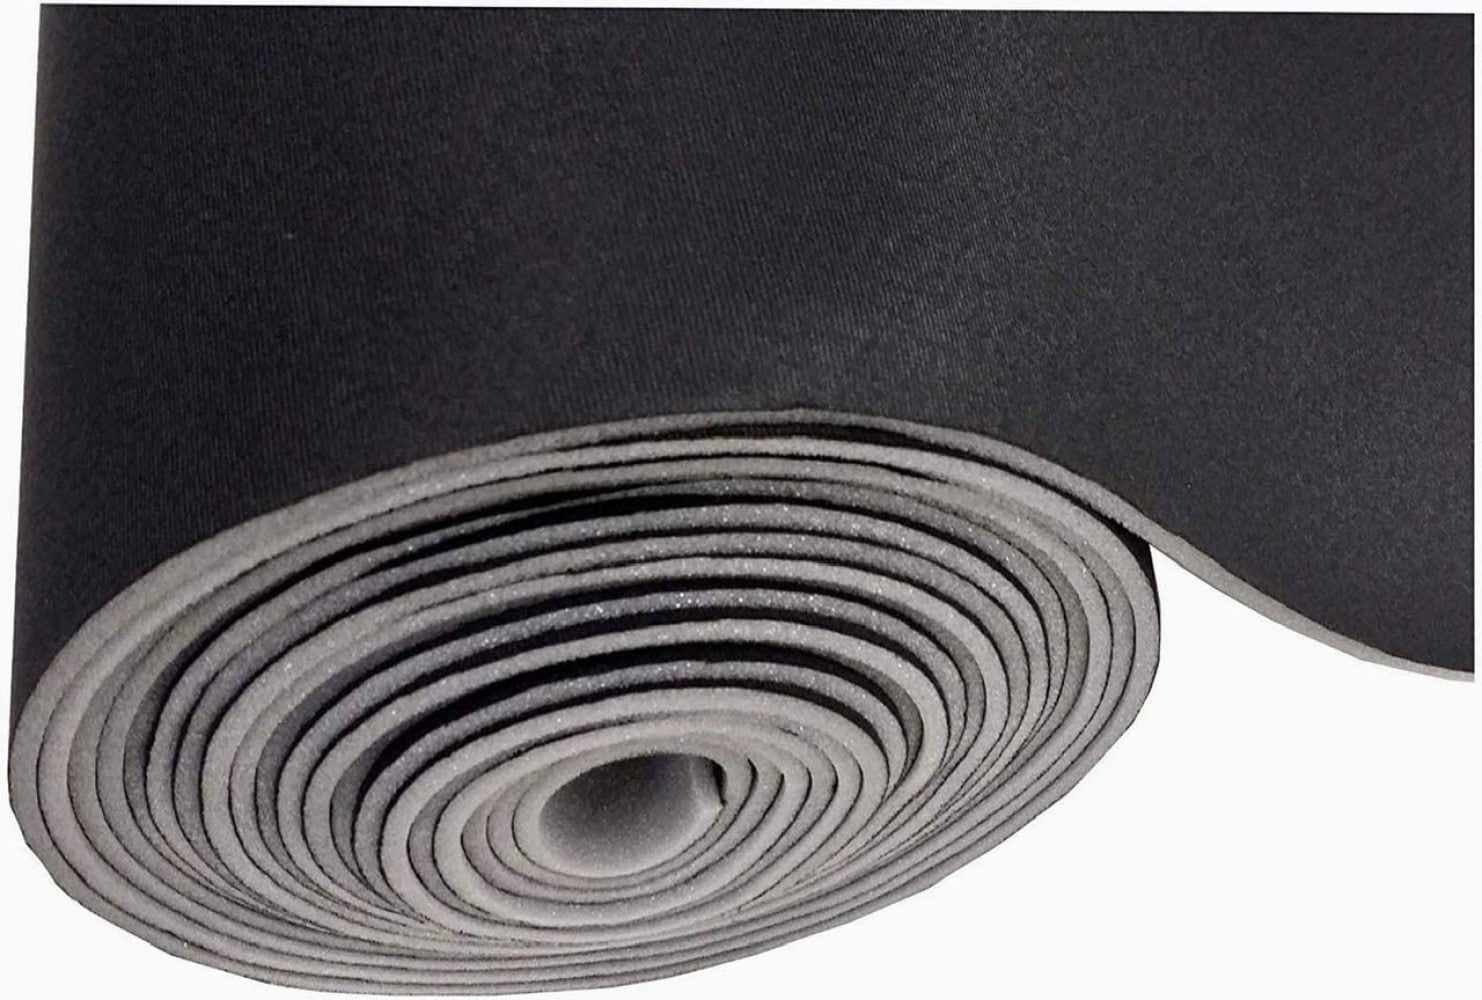 10 Feet Dark Gray/Charcoal Auto Headliner 3/16 Foam Backing Fabric Material 60 Wide x 120 Long 